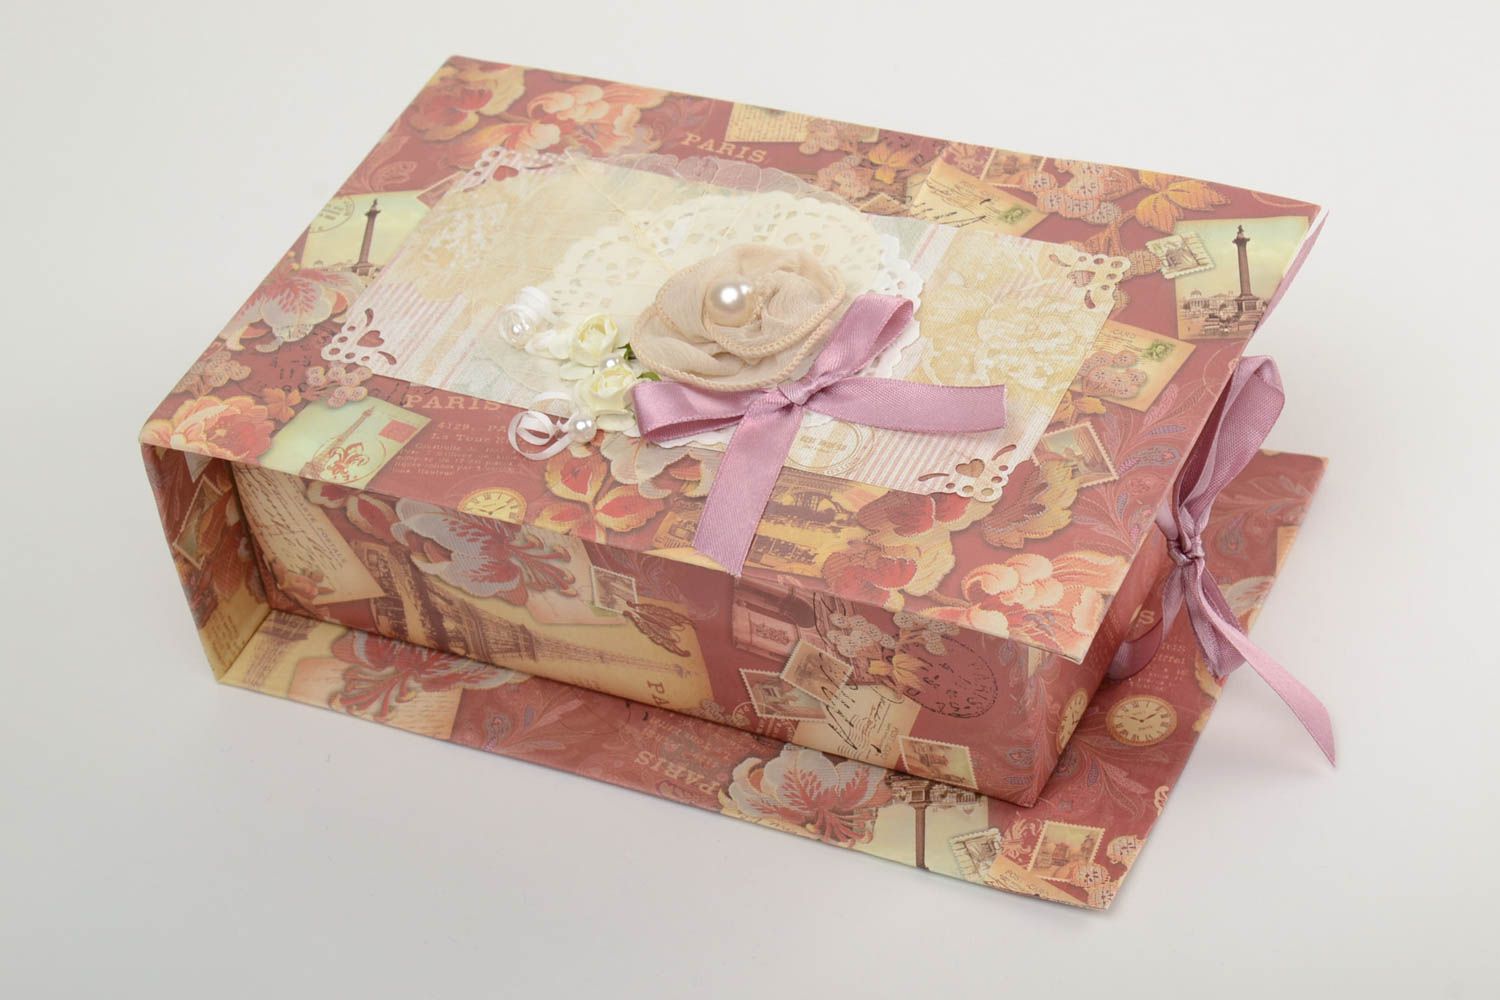 Декоративная коробка для подарка с лентами и тканью внутри красивая хэнд мейд фото 2